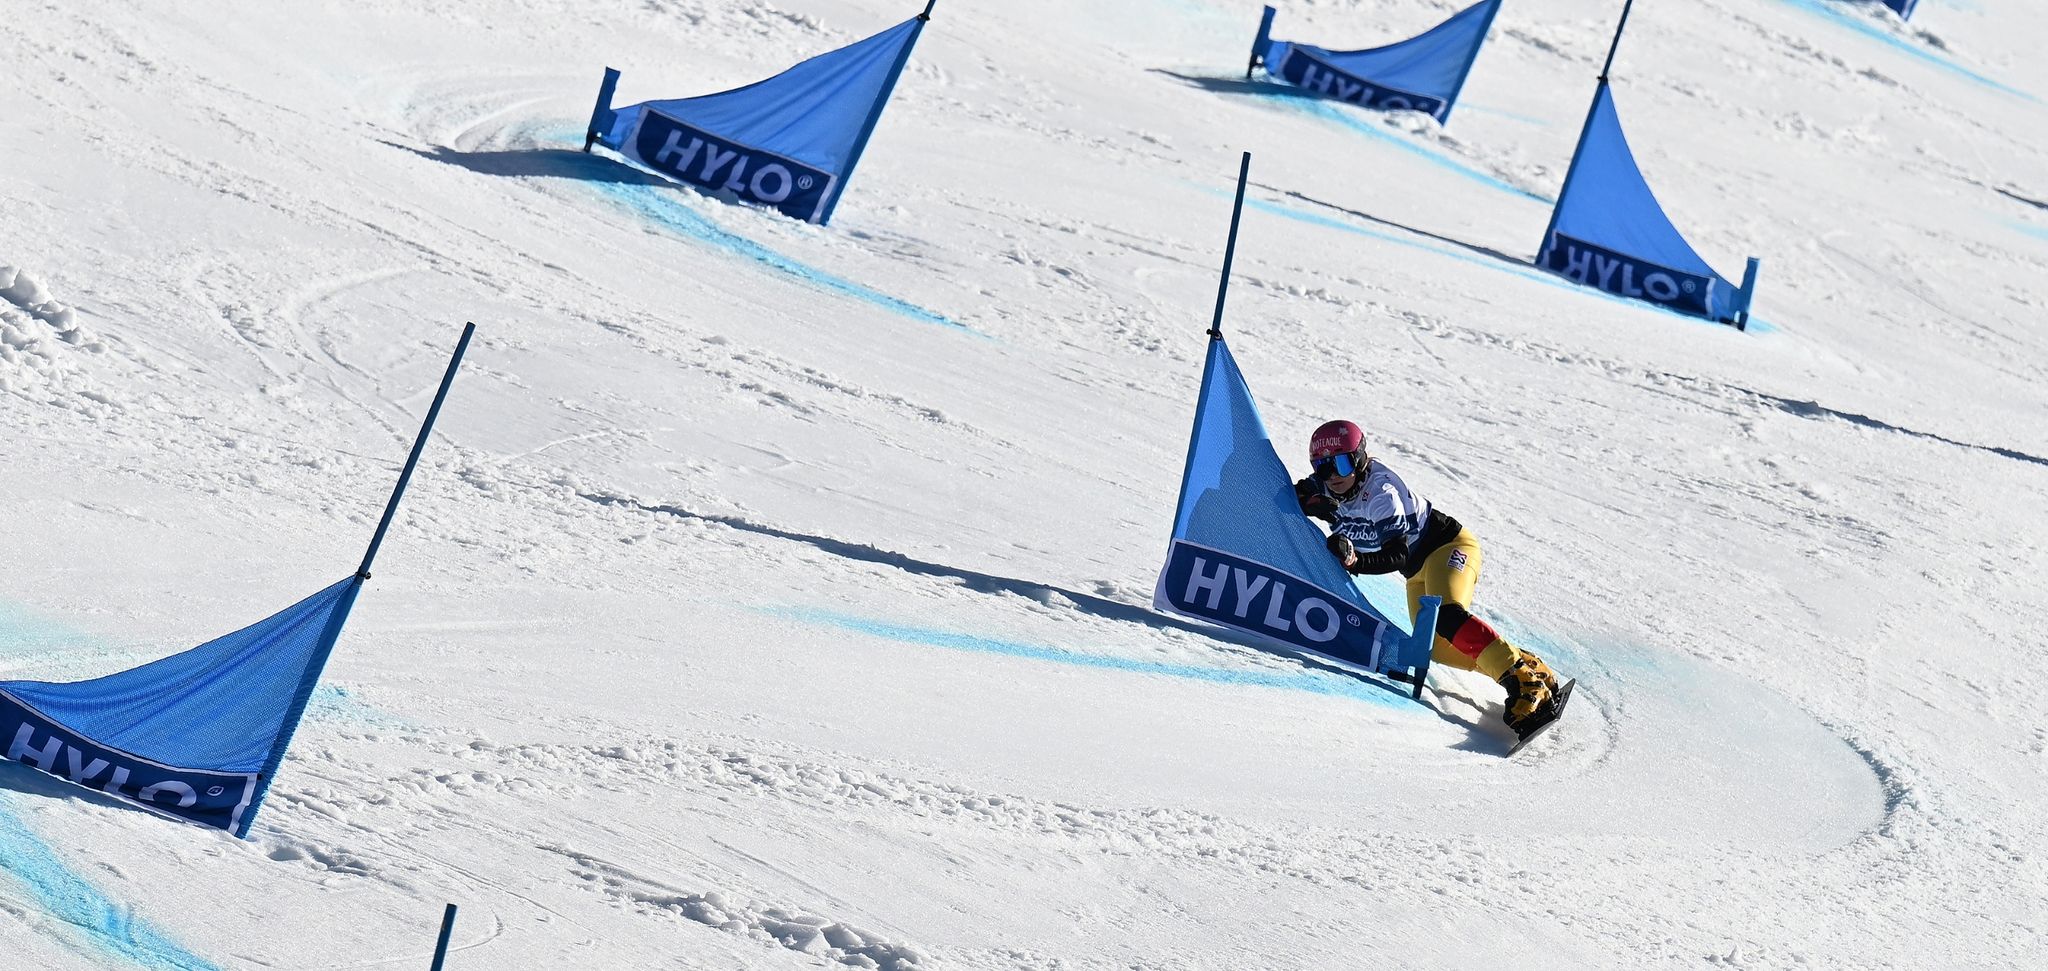 snowboard-weltcup in berchtesgaden abgesagt